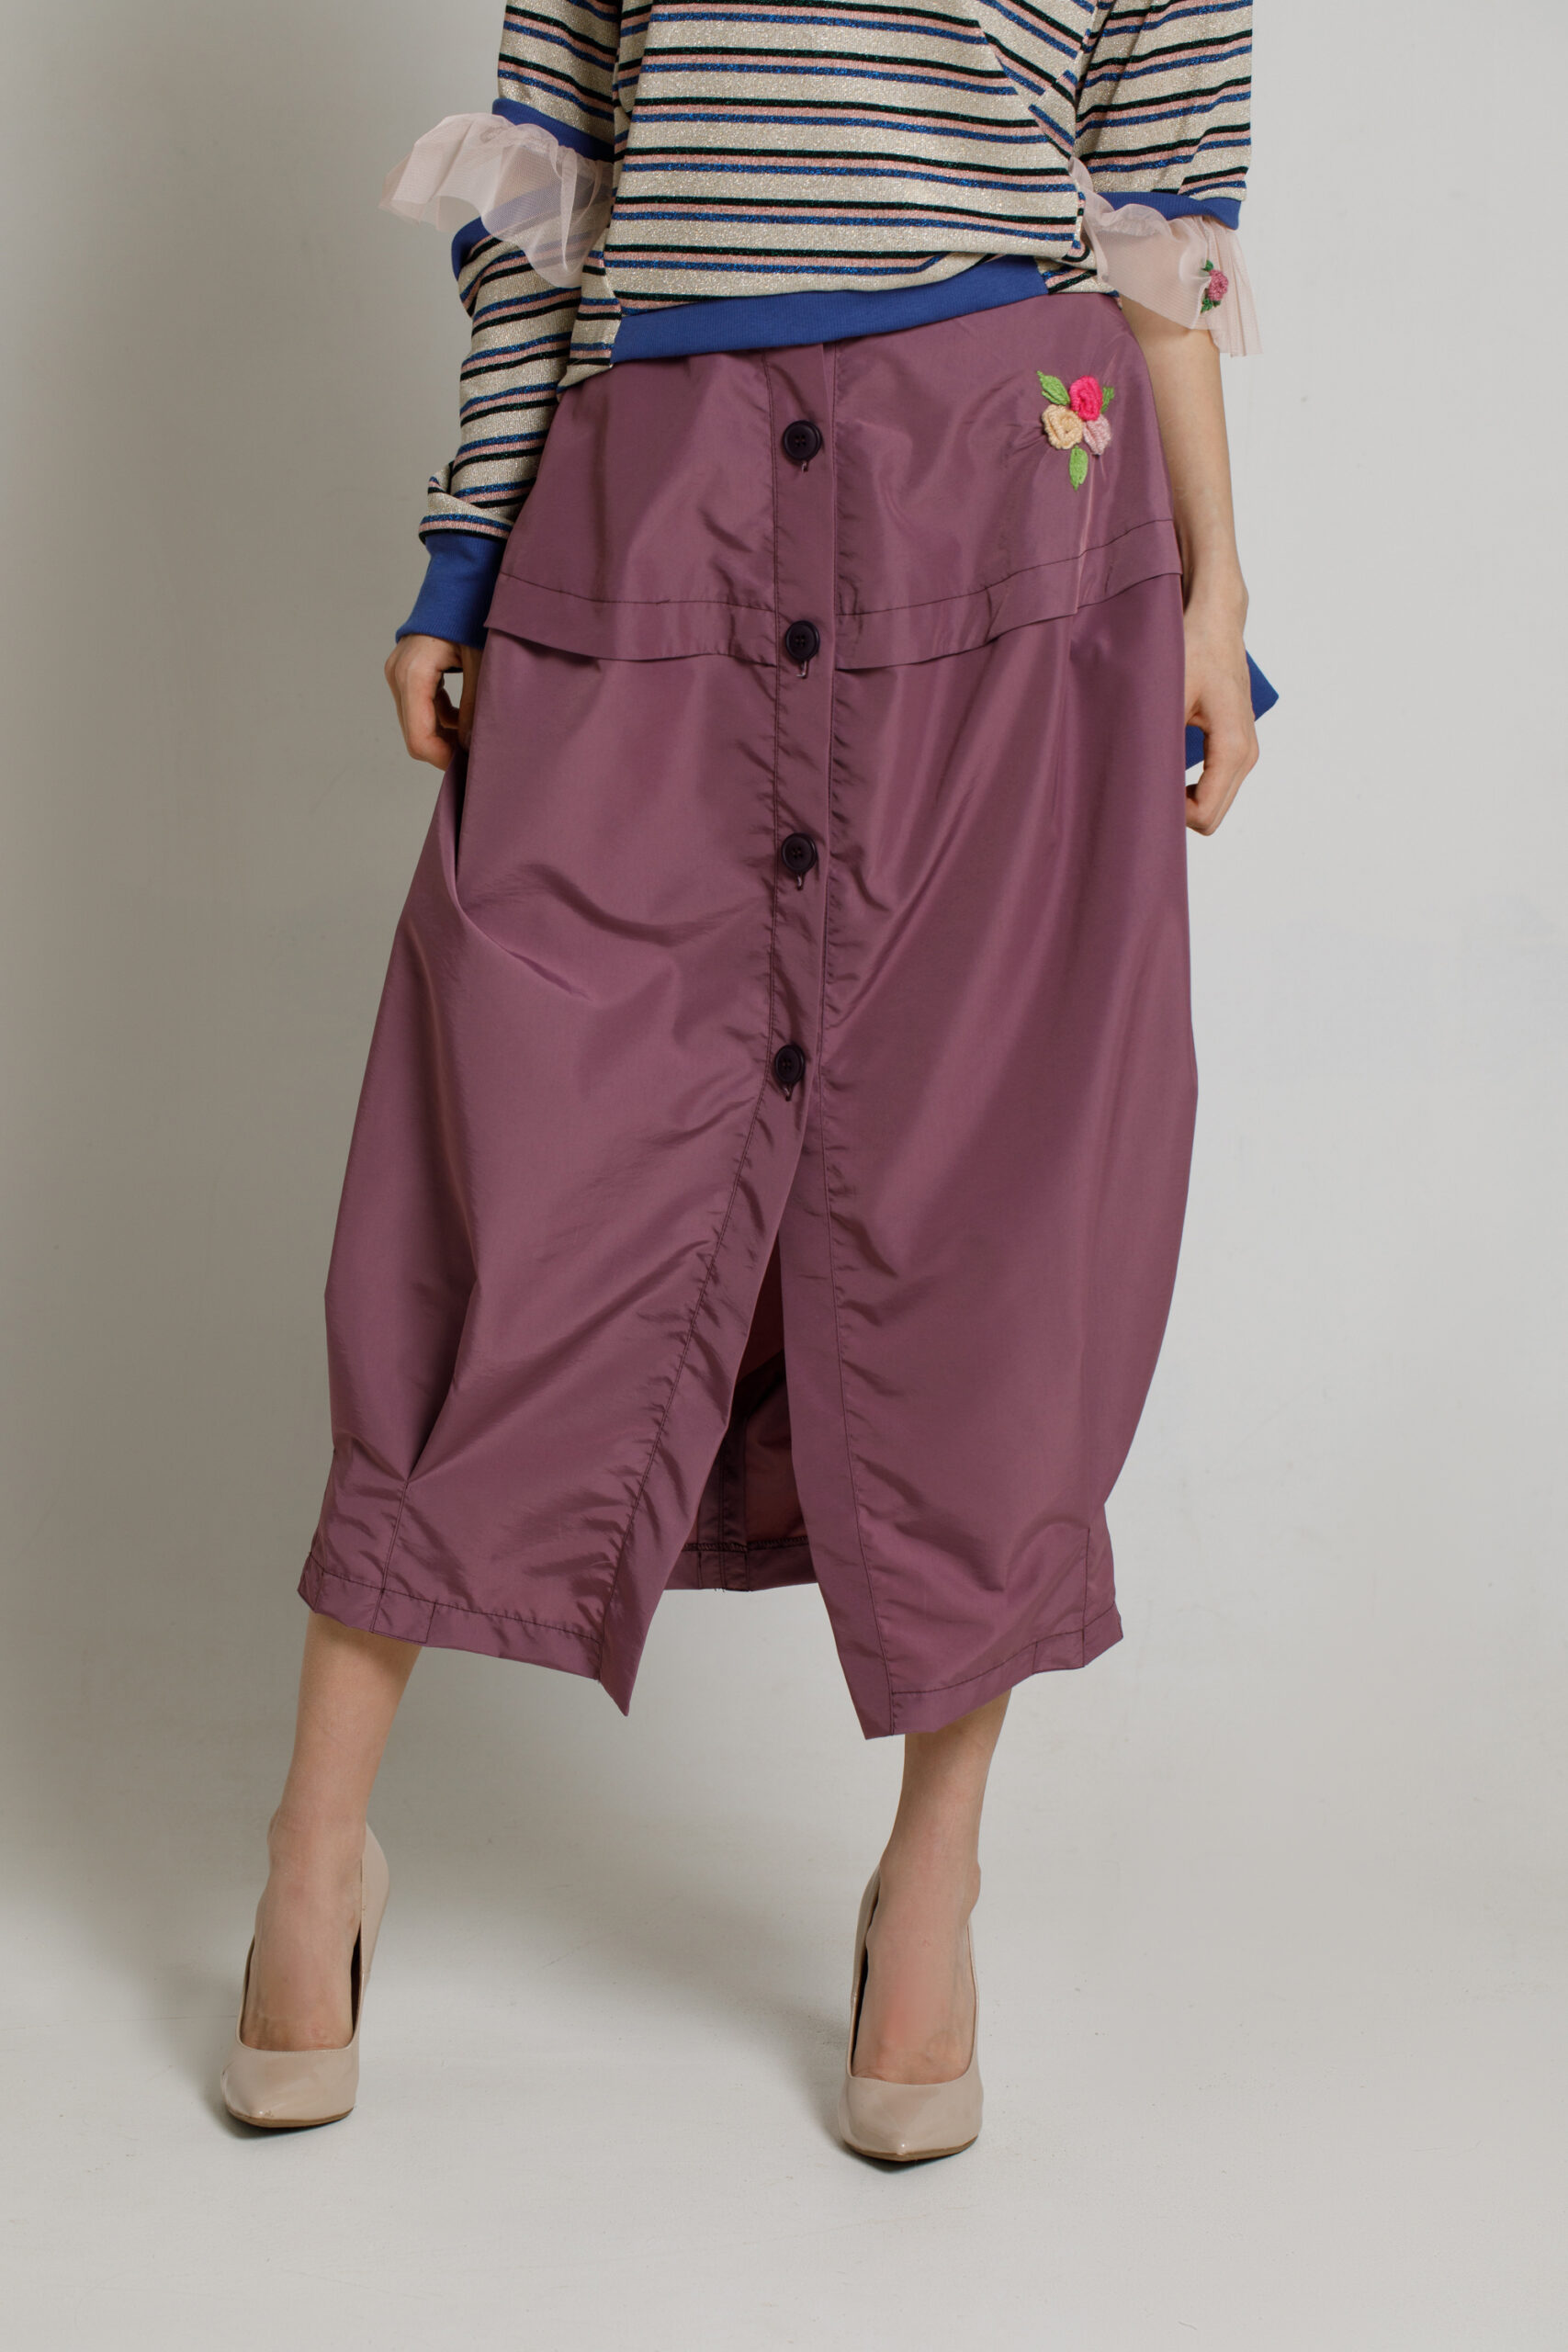 ANNE casual purple taffeta skirt with buttons. Natural fabrics, original design, handmade embroidery